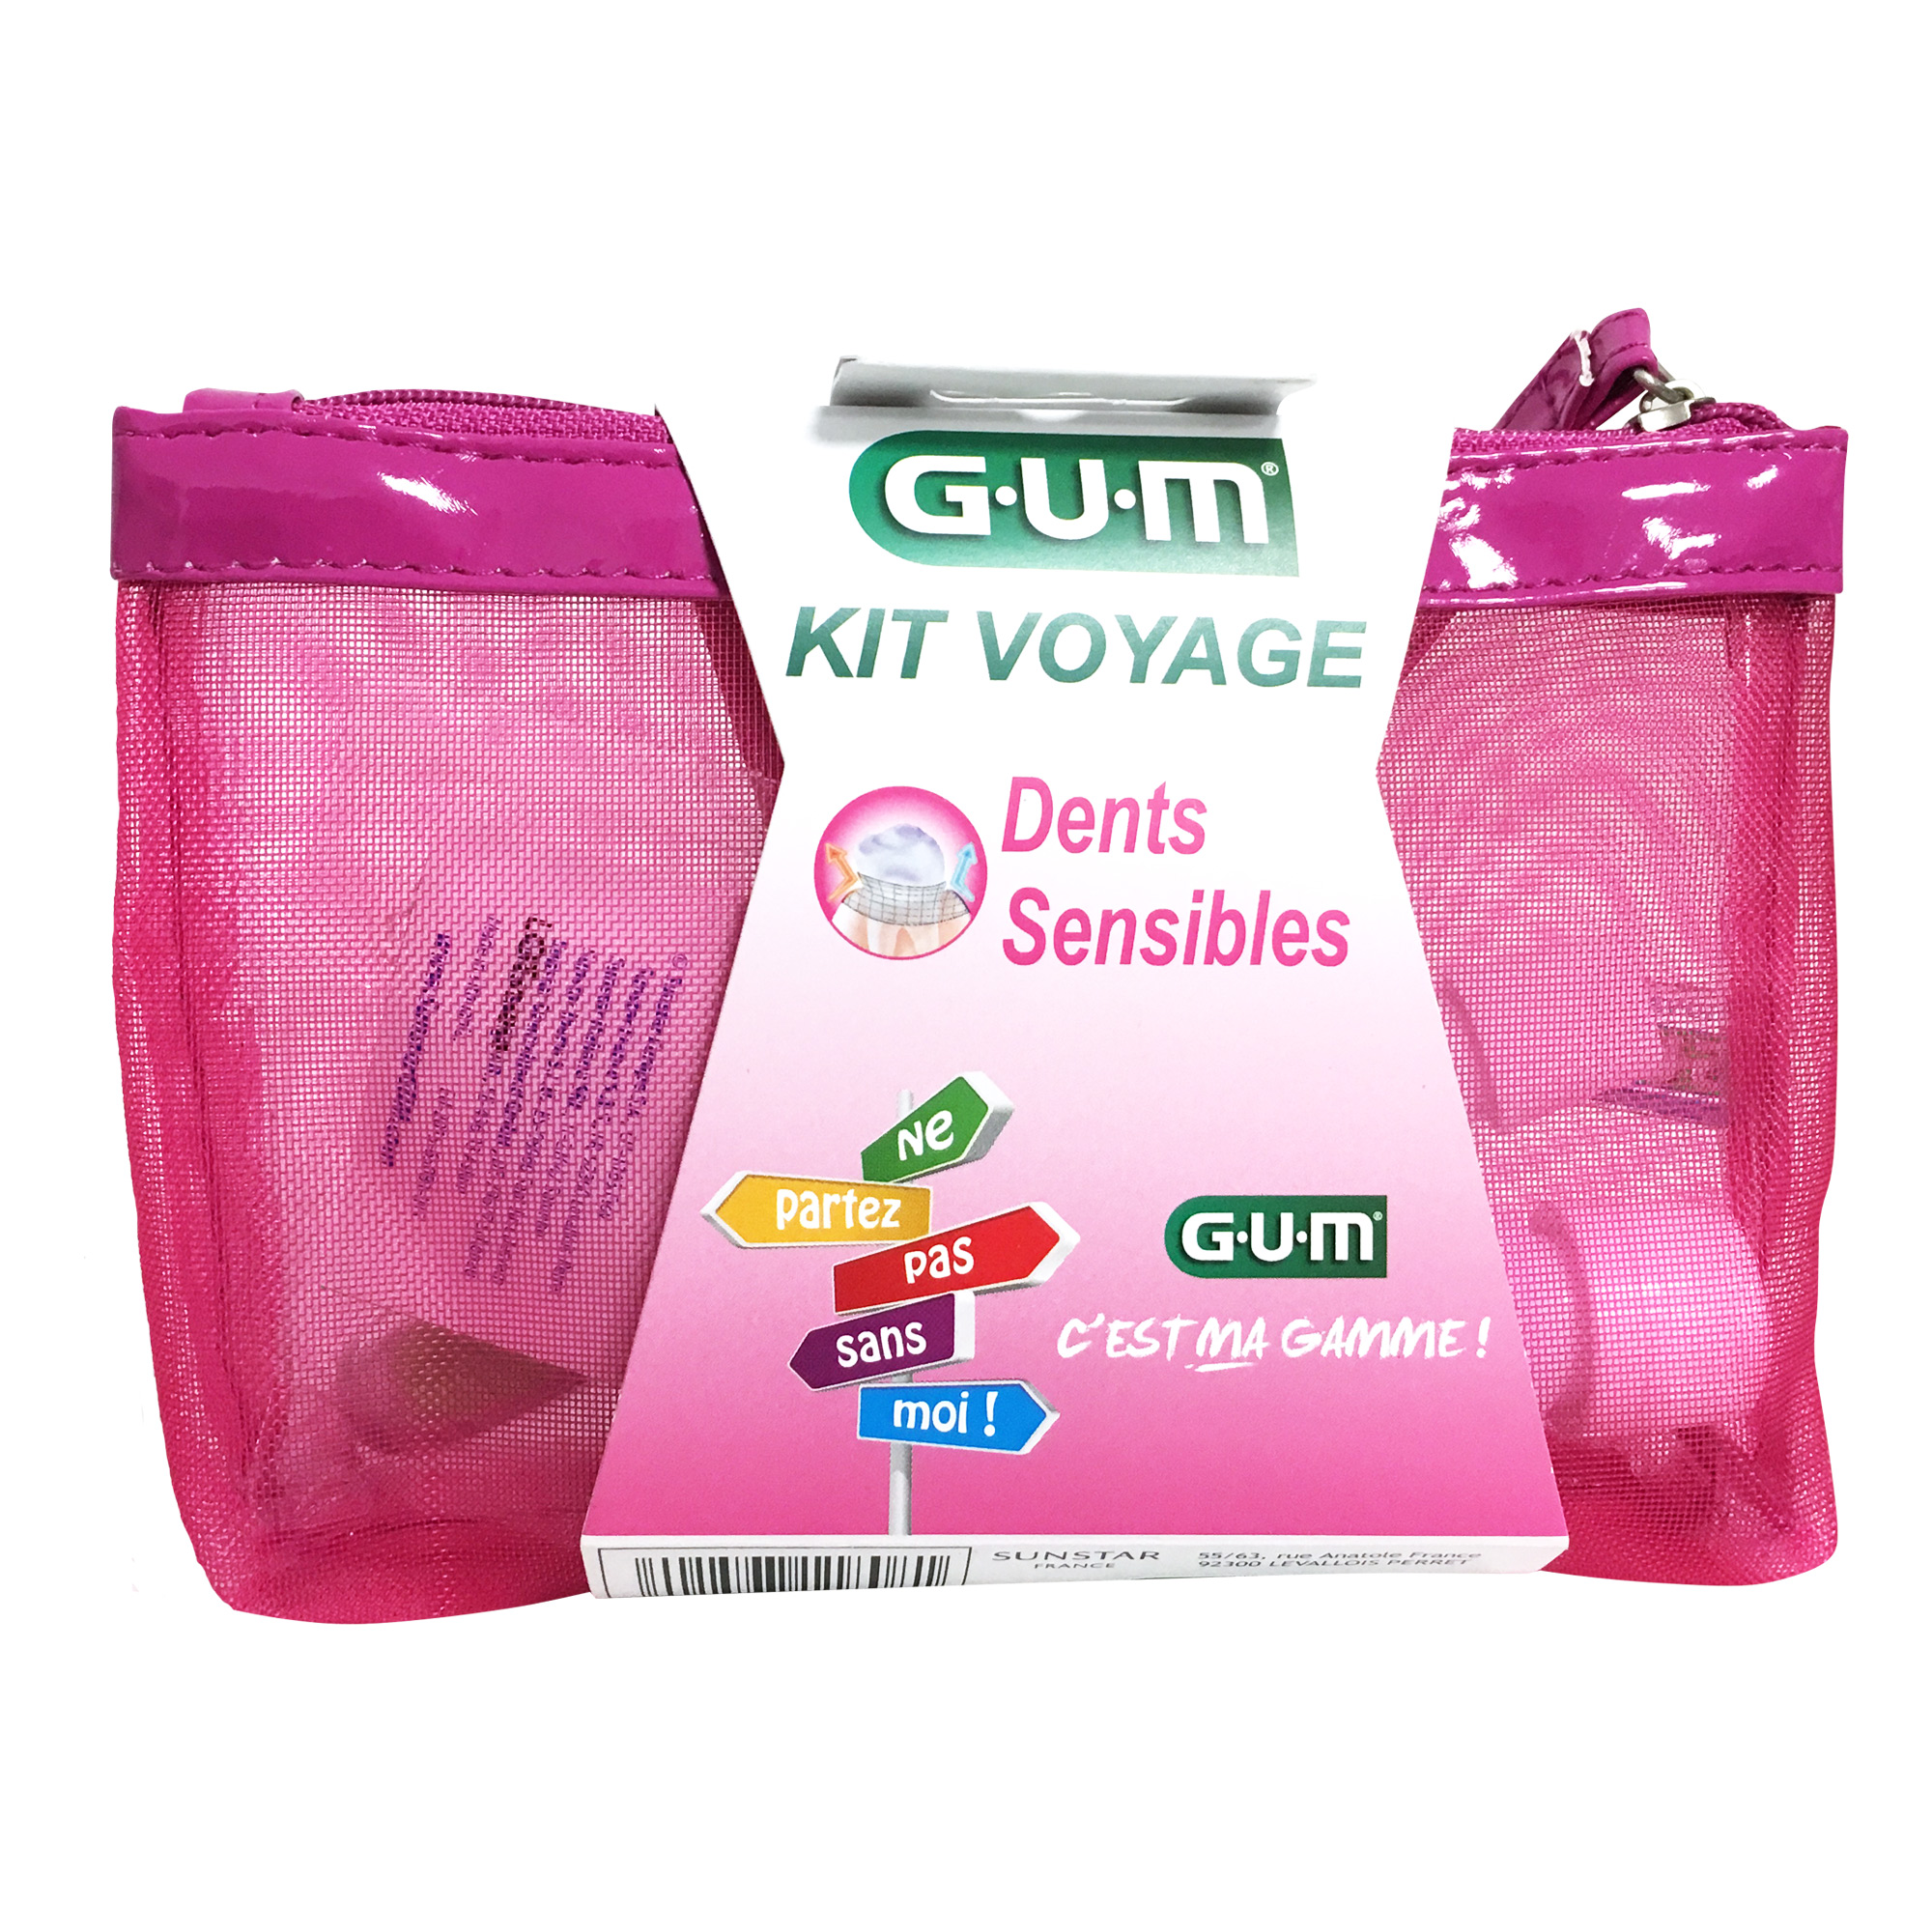 GUM Kit voyage Junior - Pharmacie en ligne